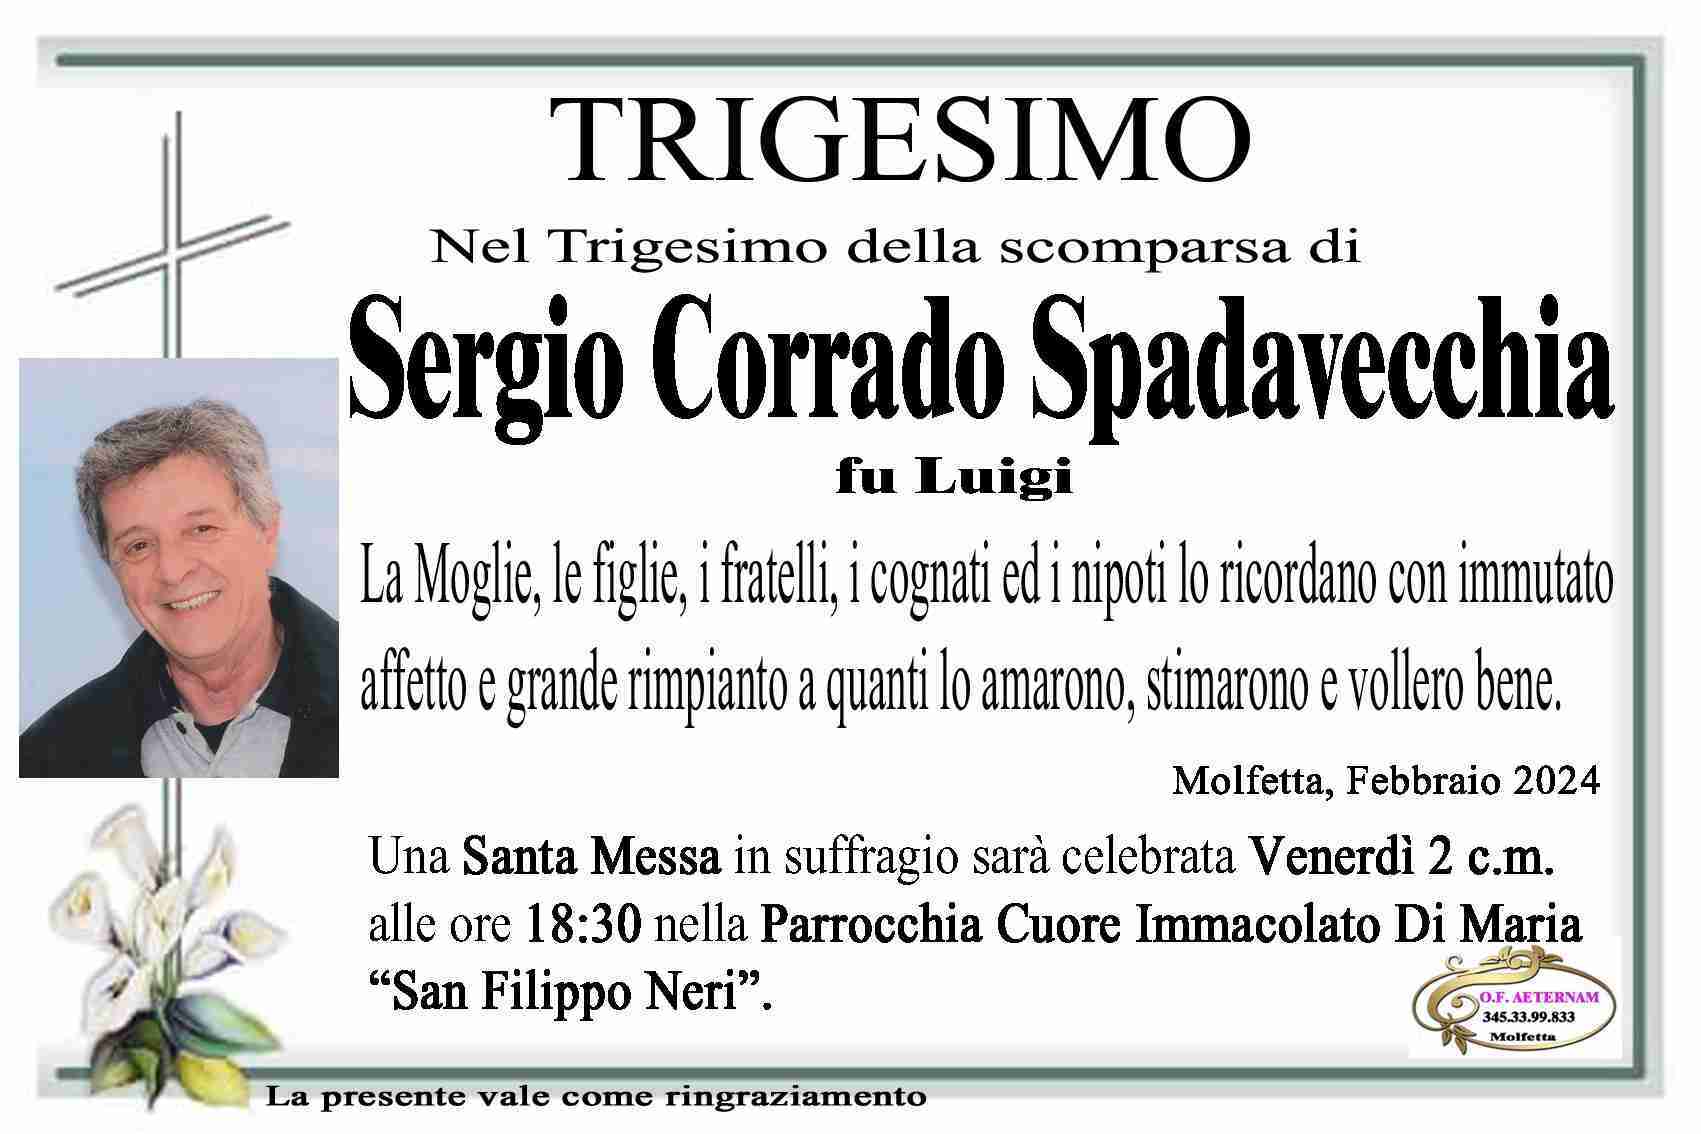 Sergio Corrado Spadavecchia